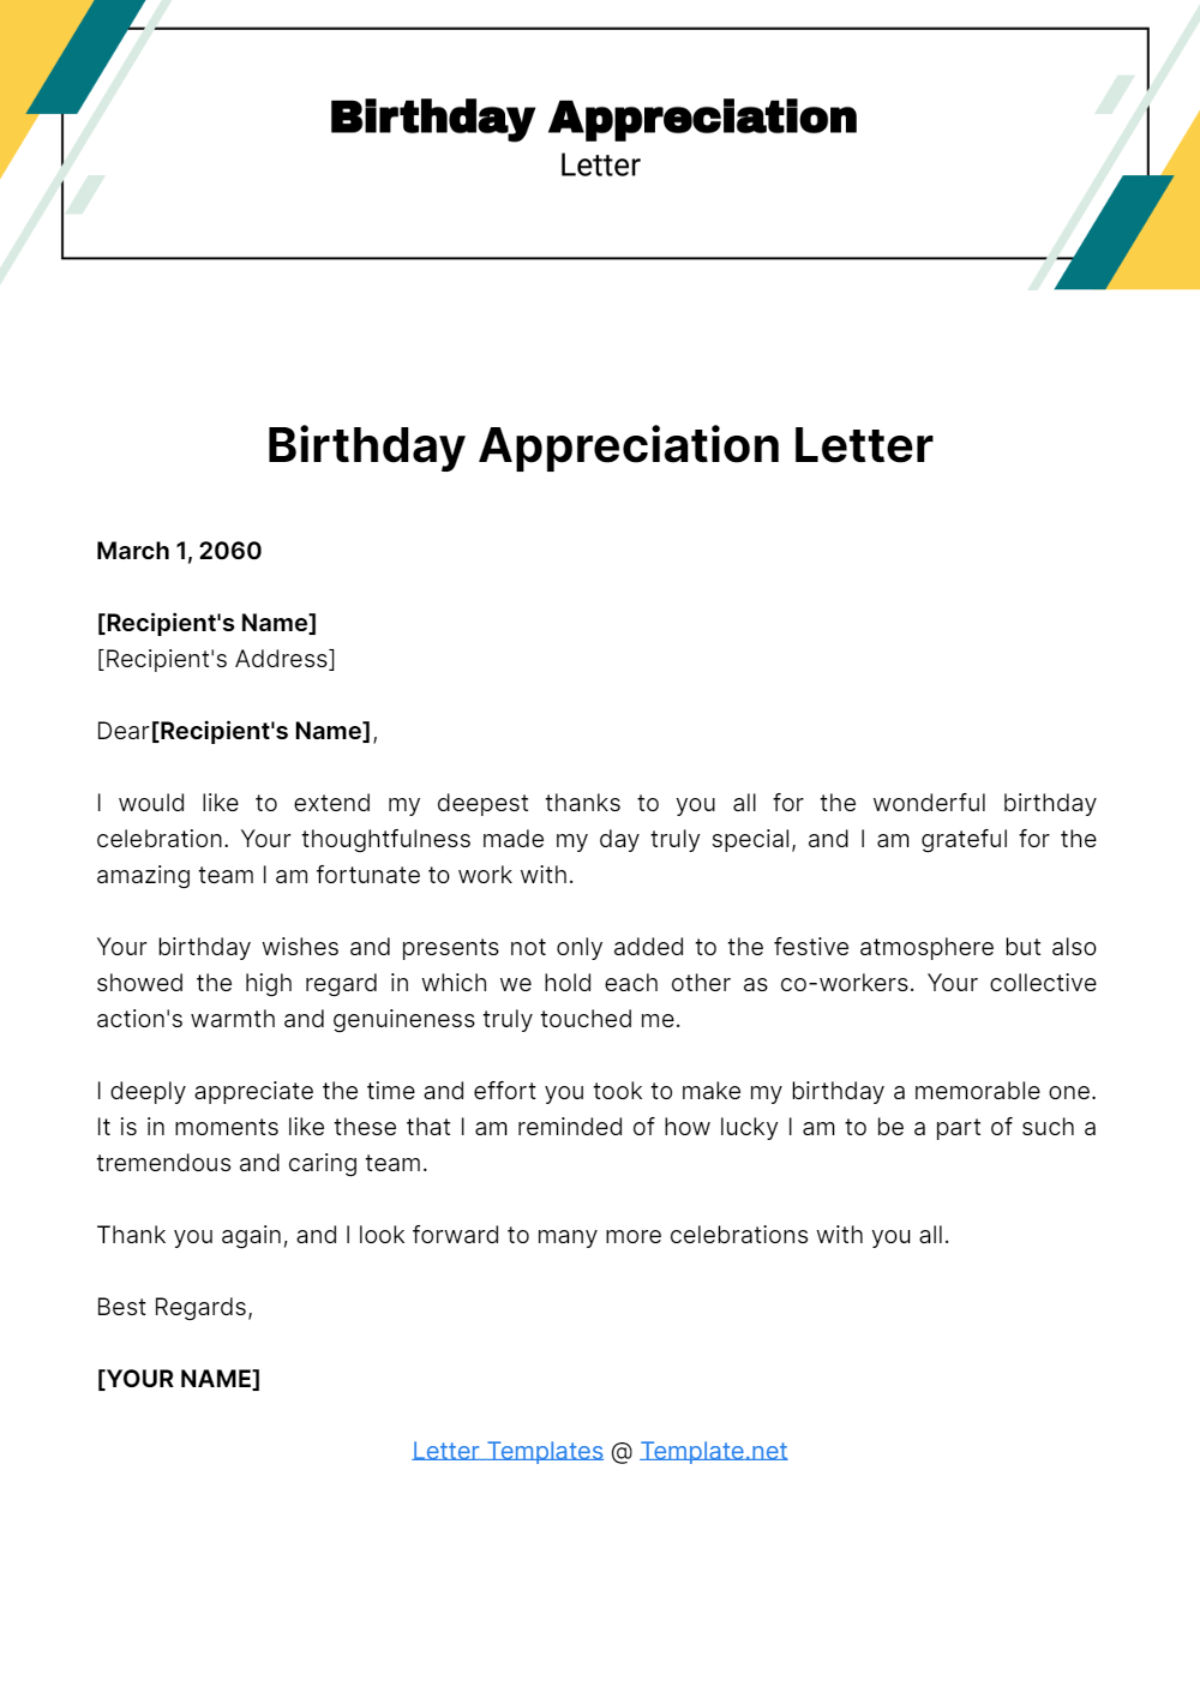 Free Birthday Appreciation Letter Template